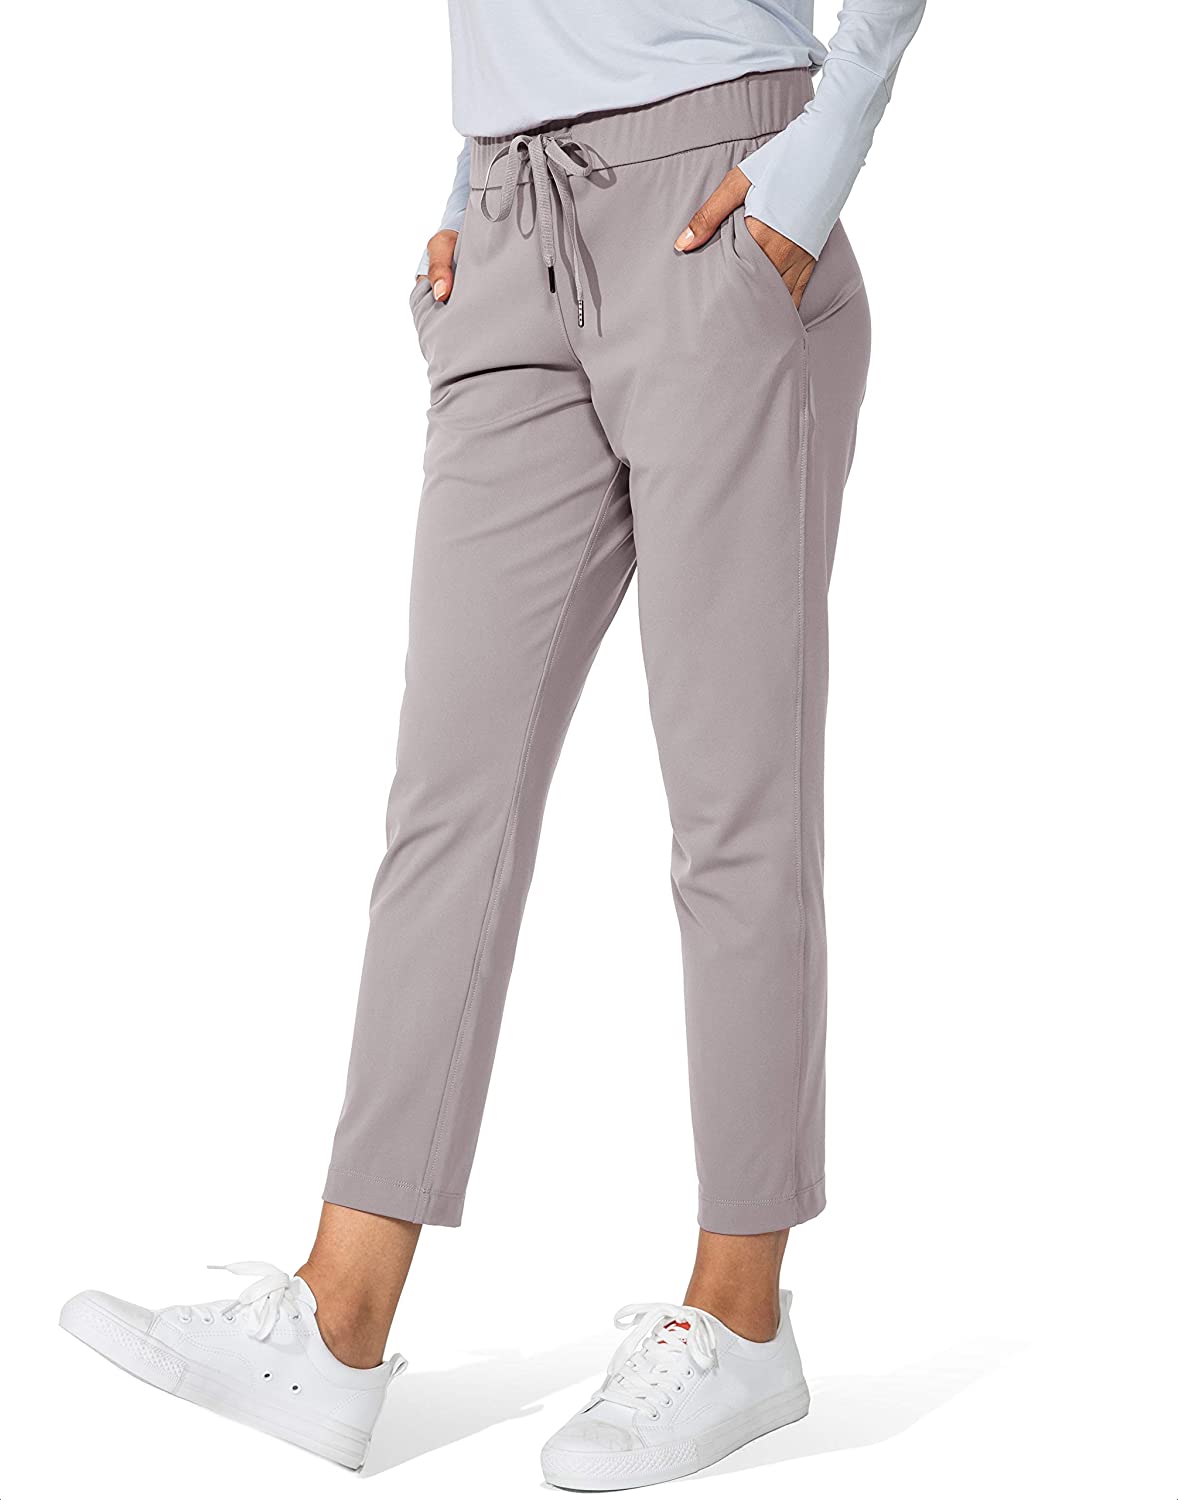 G Gradual Women's Pants with Deep Pockets 7/8 Stretch Sweatpants